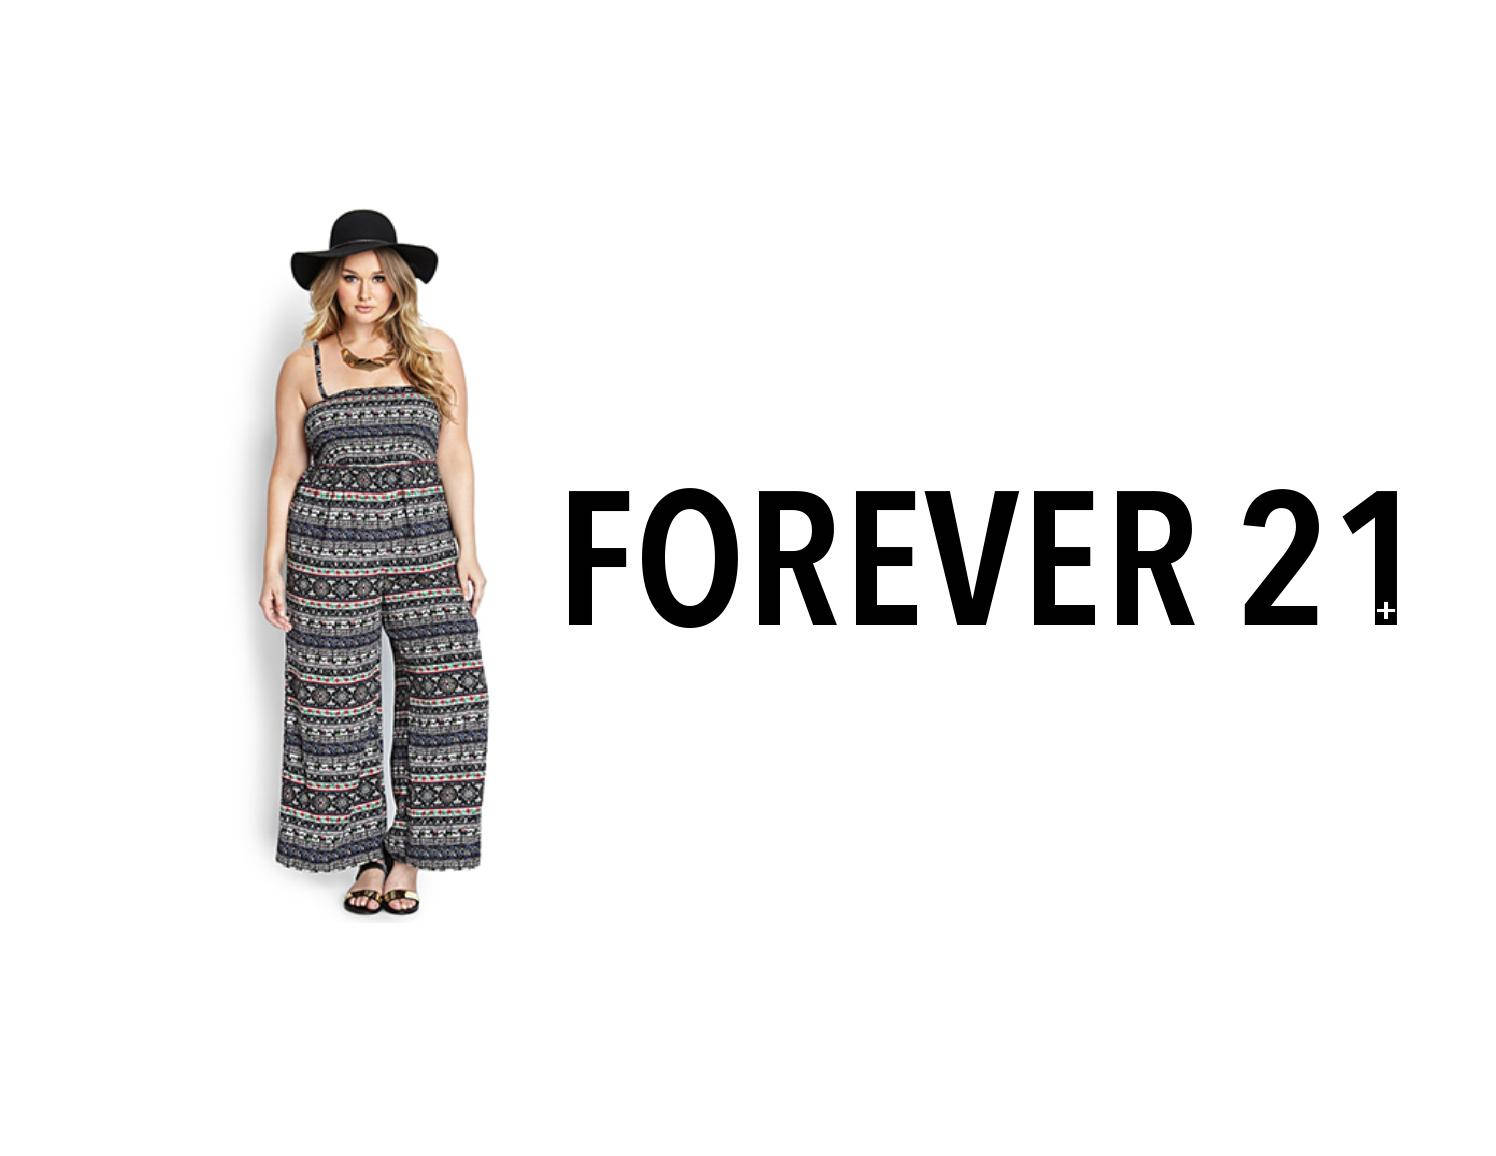 Forever 21 Stylish Fashion Brand